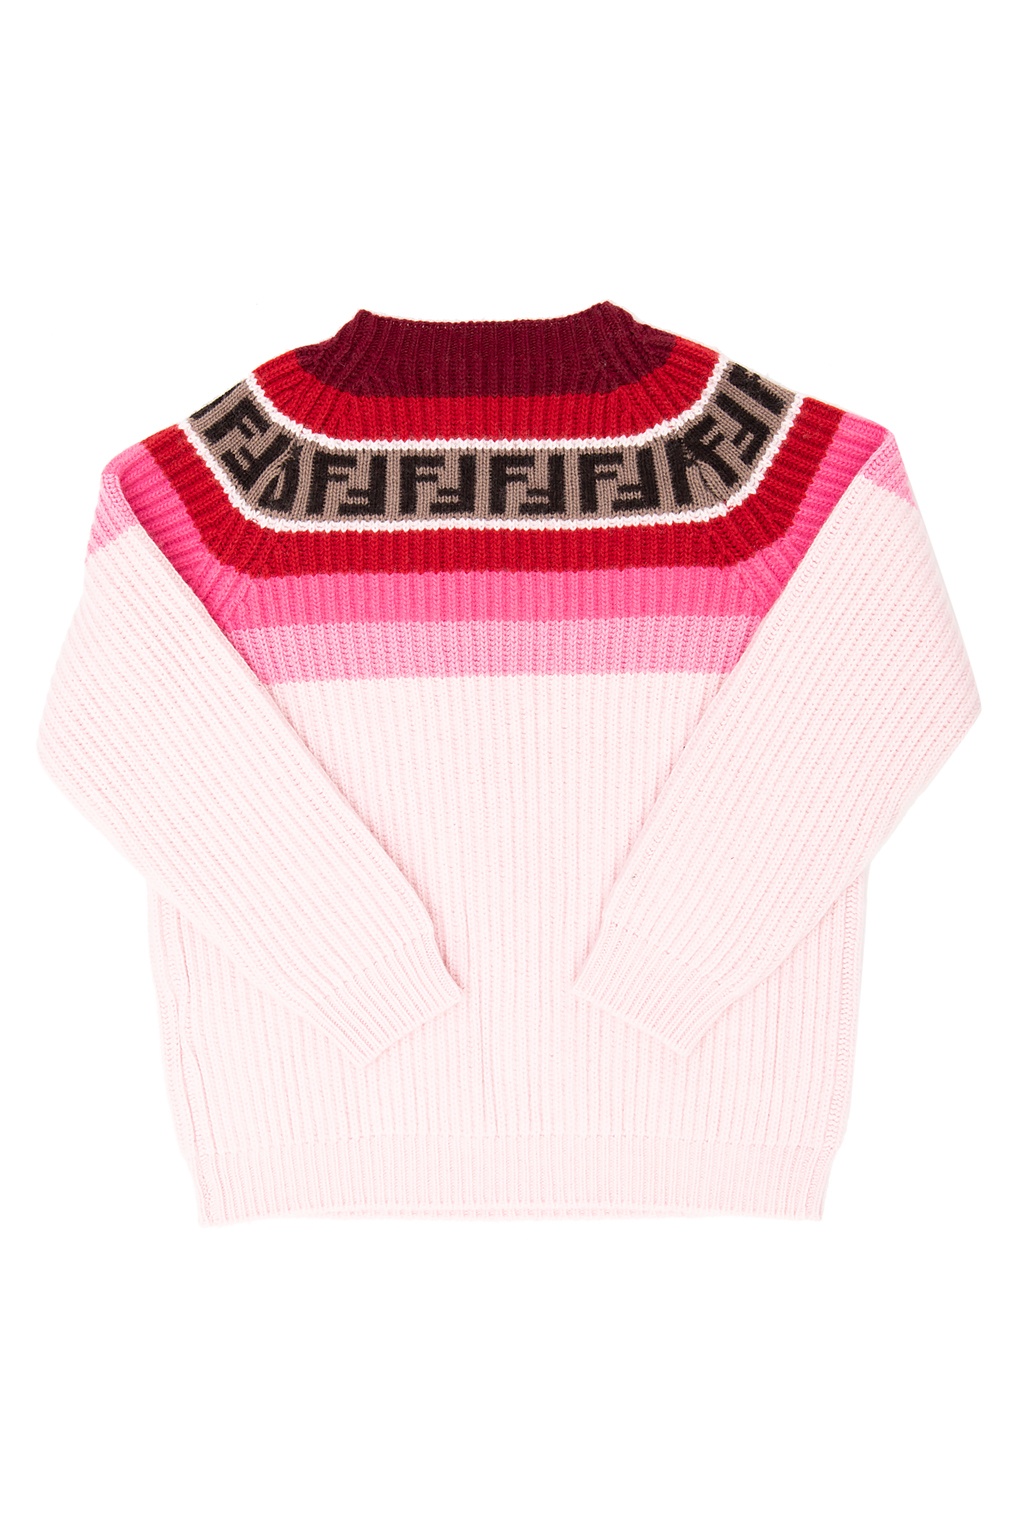 fendi colorful sweater